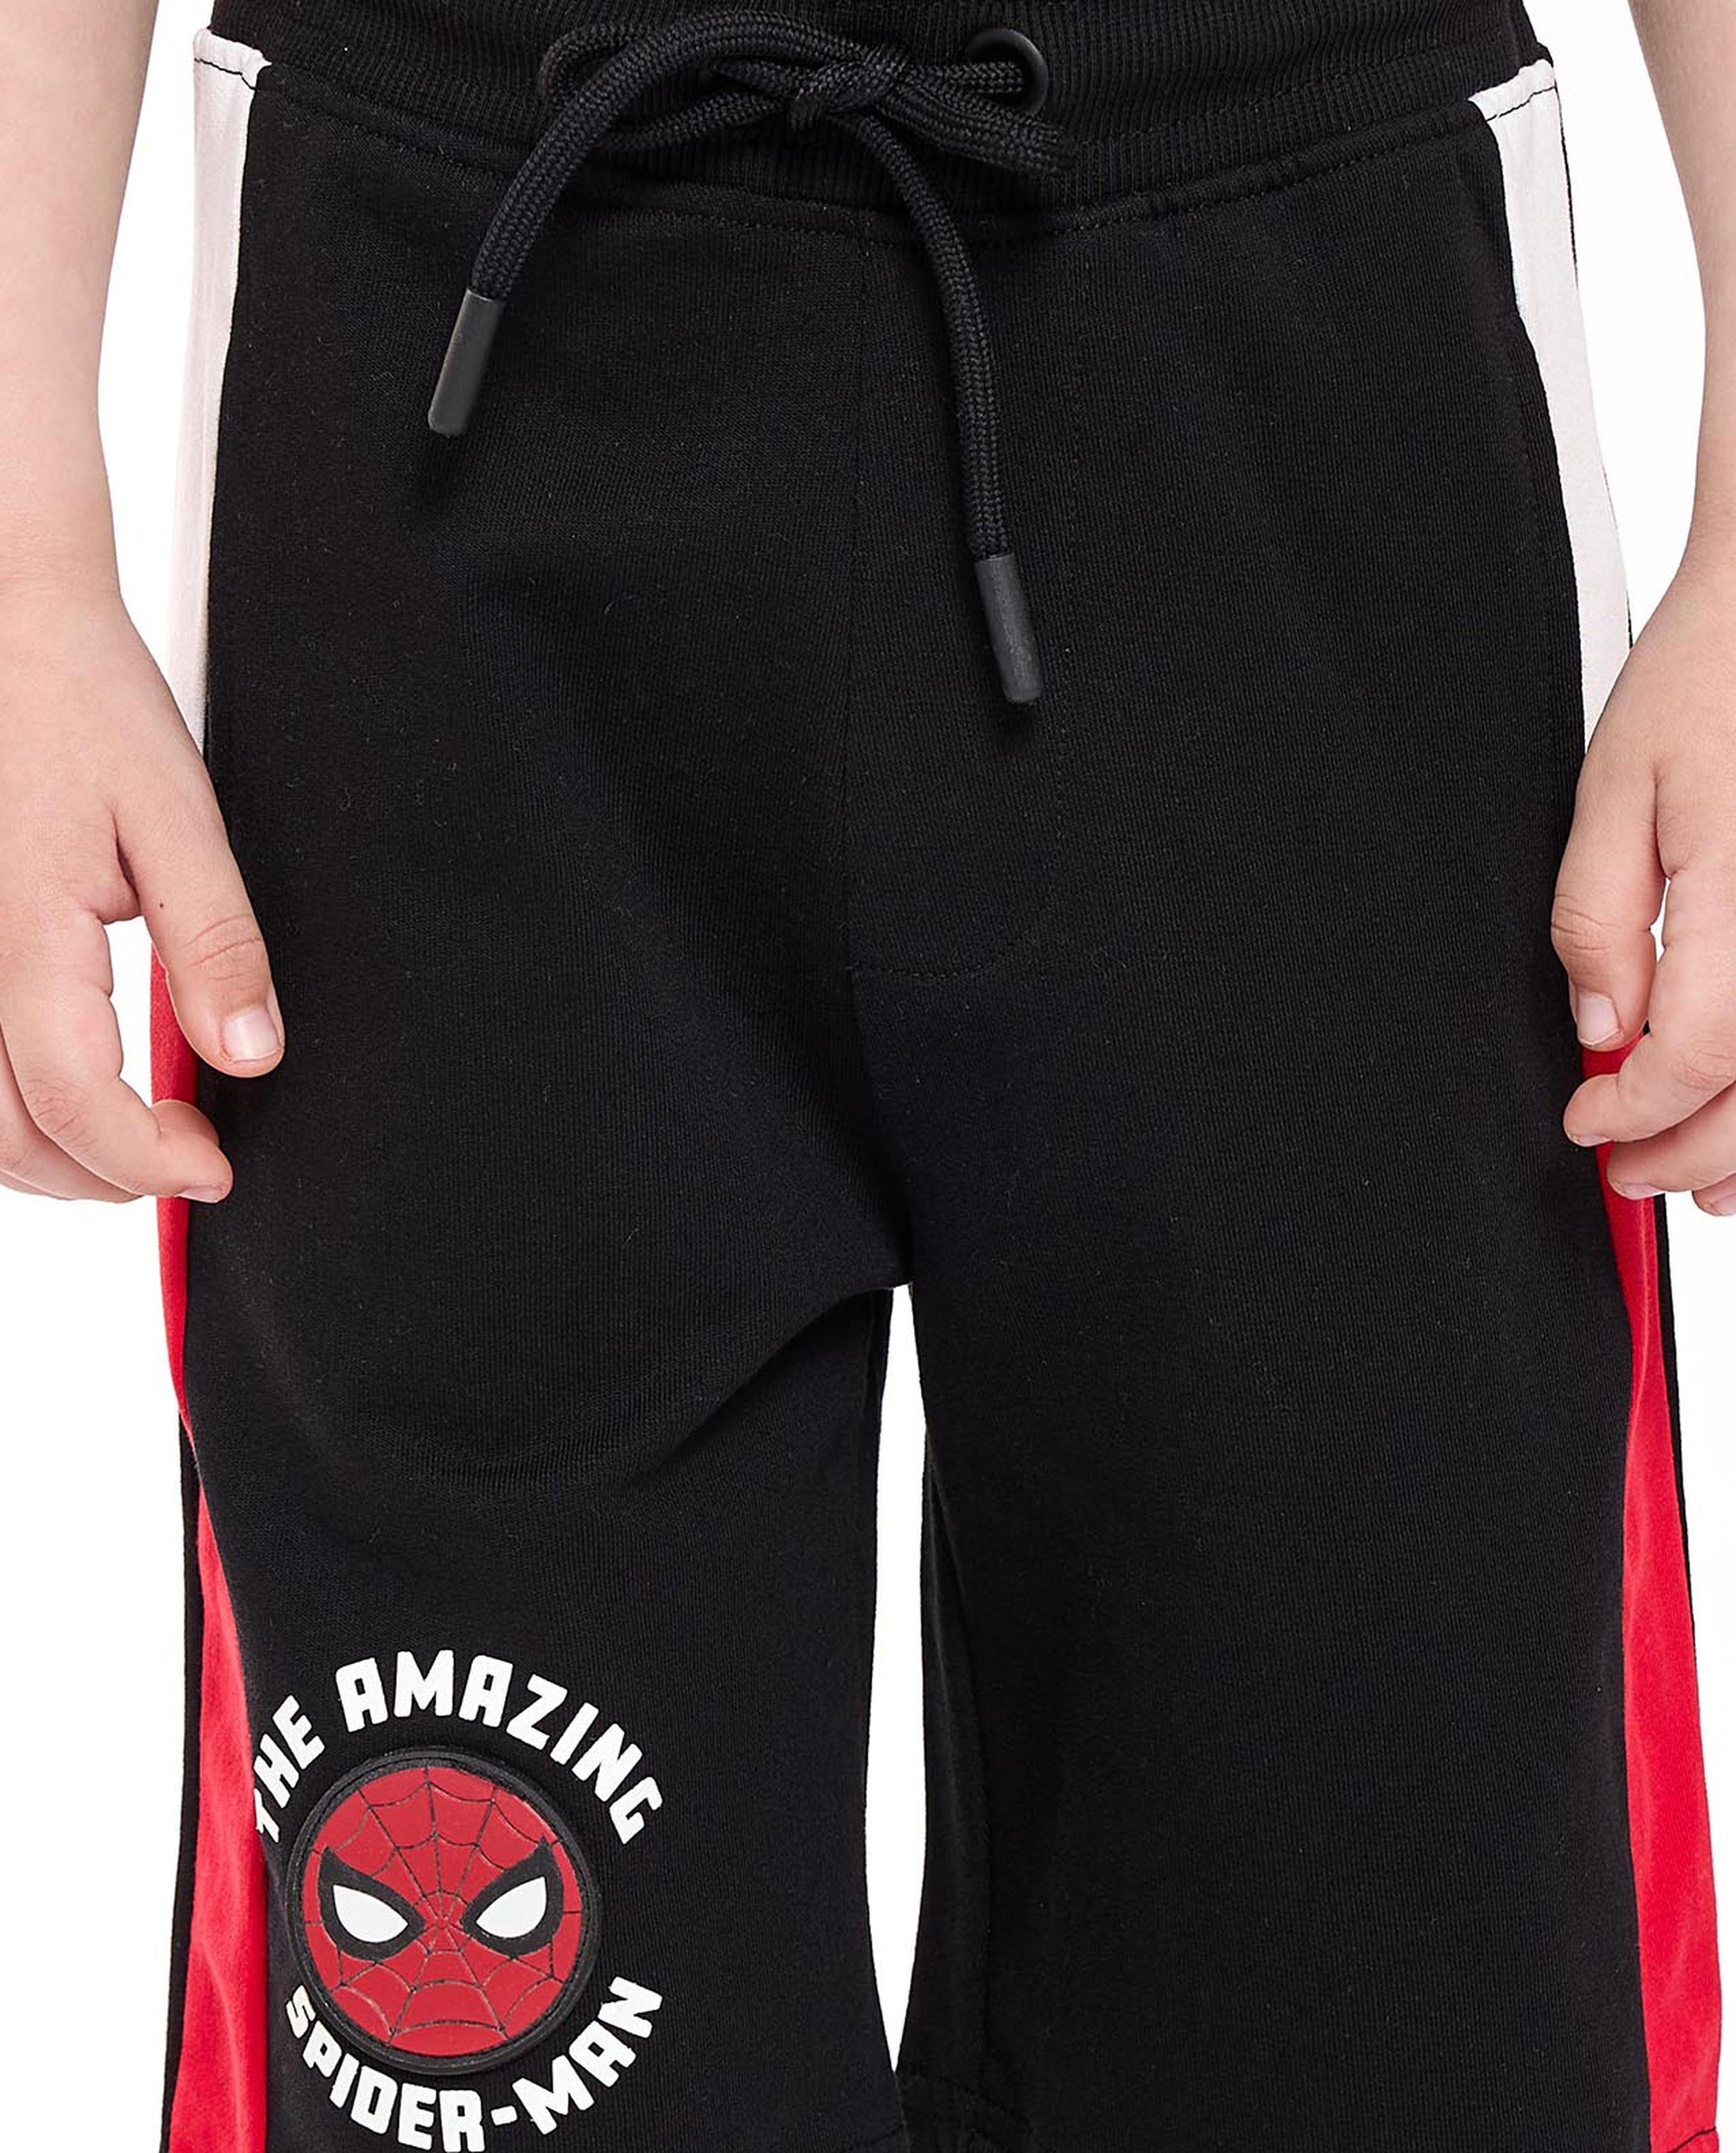 Spider-Man Print Shorts with Drawstring Waist